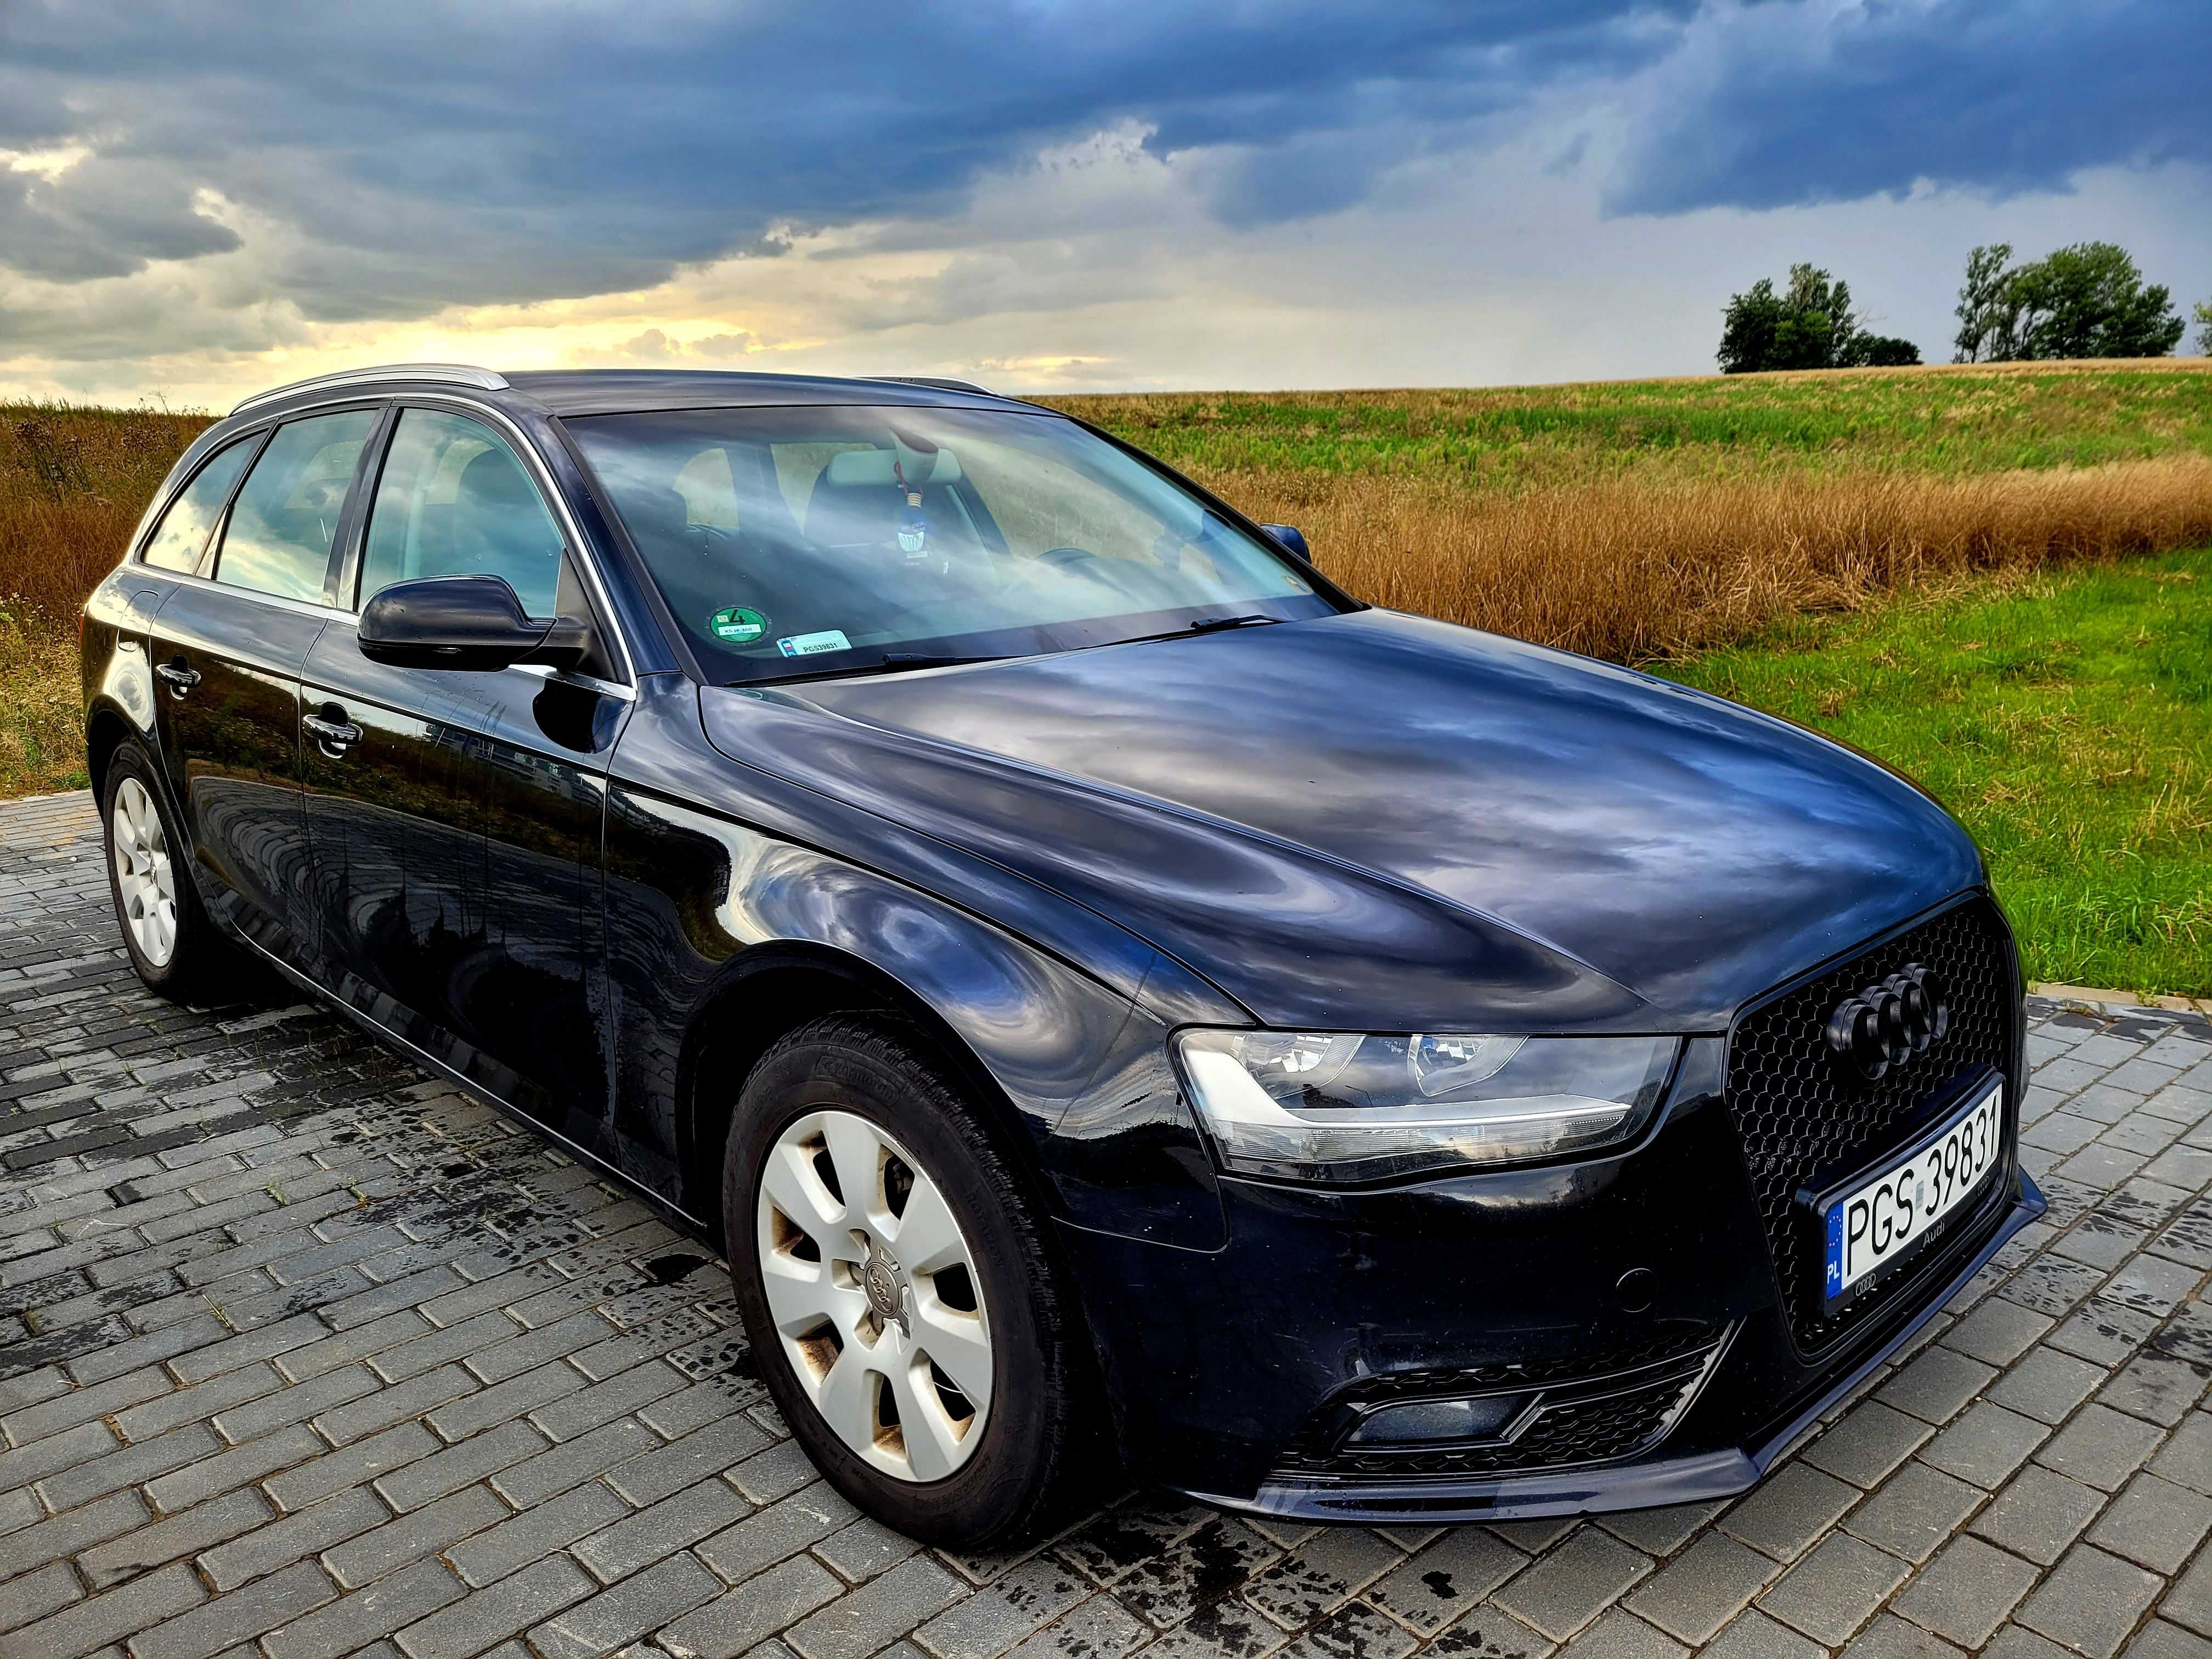 Audi A4 B8 2.0 Diesel 2014 r. 176,8 KM po liftingu